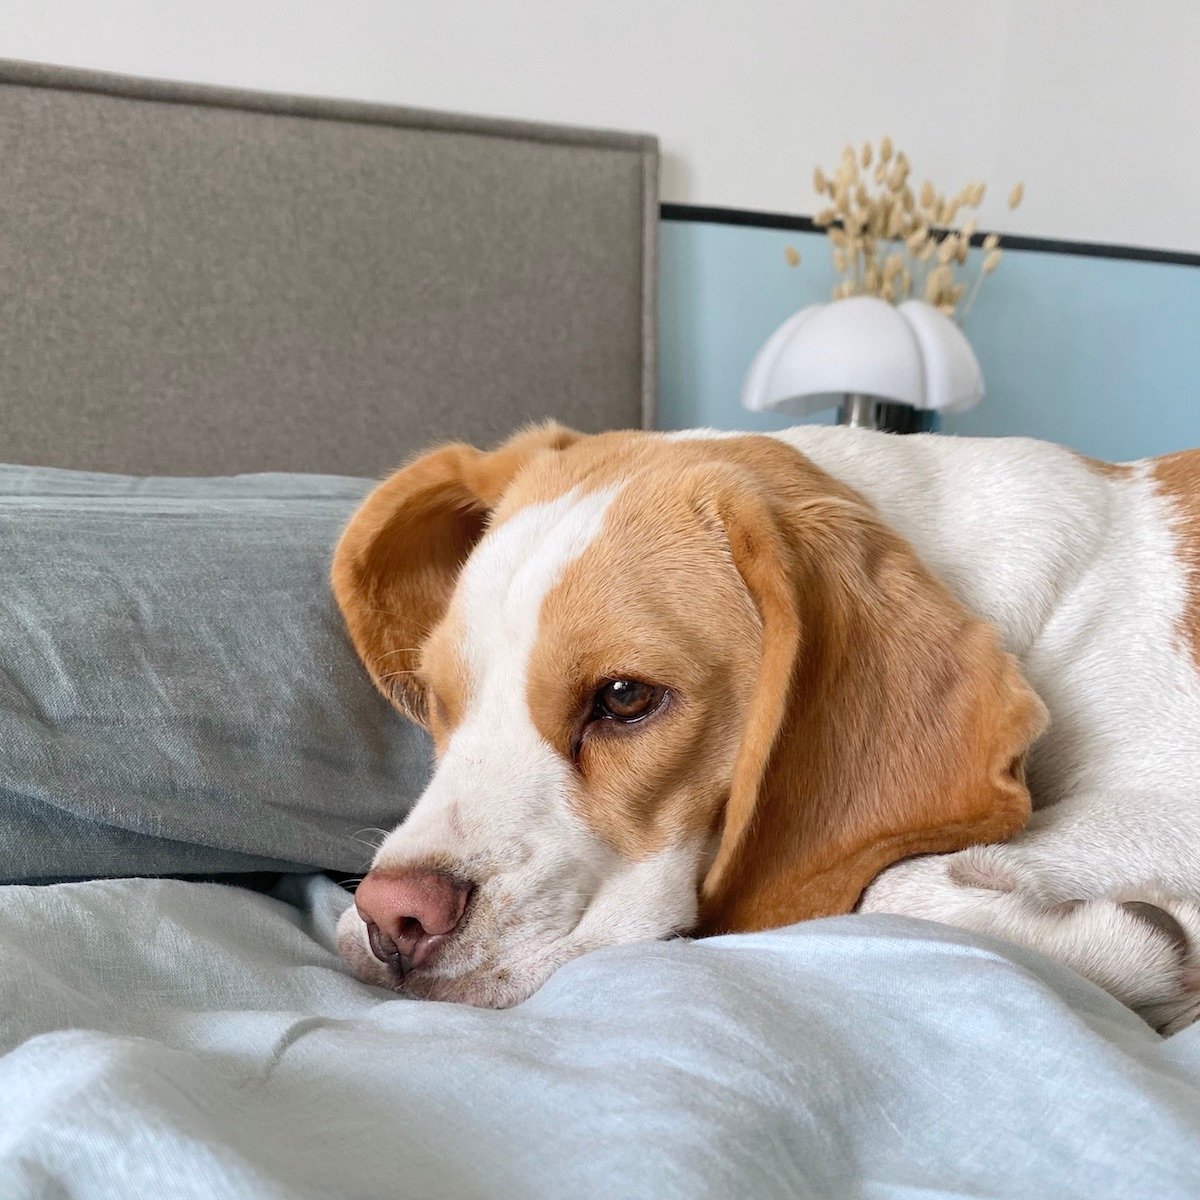 adopter chien beagle lemon chiot - blogueuse déco clem around the corner